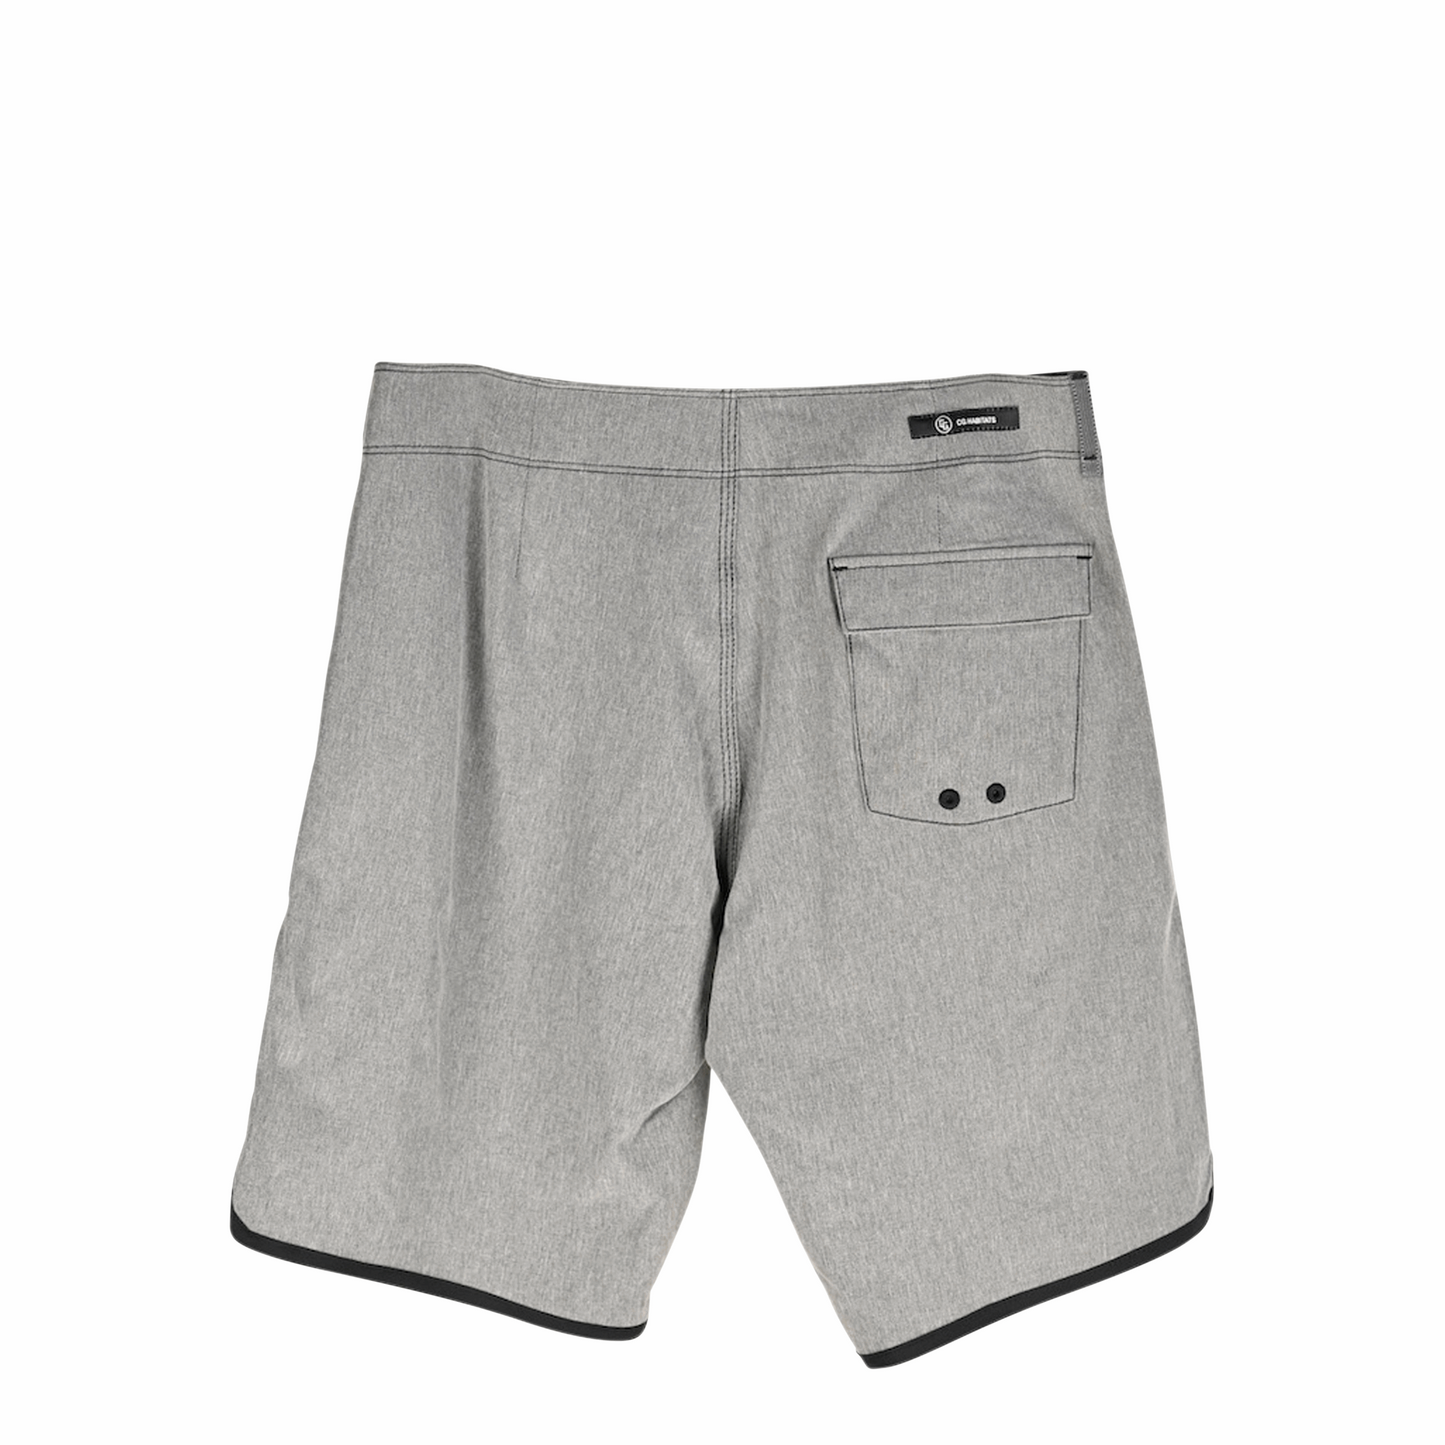 309 Fit / OG Athletic Fit / Board Shorts, Goodies N Stuff